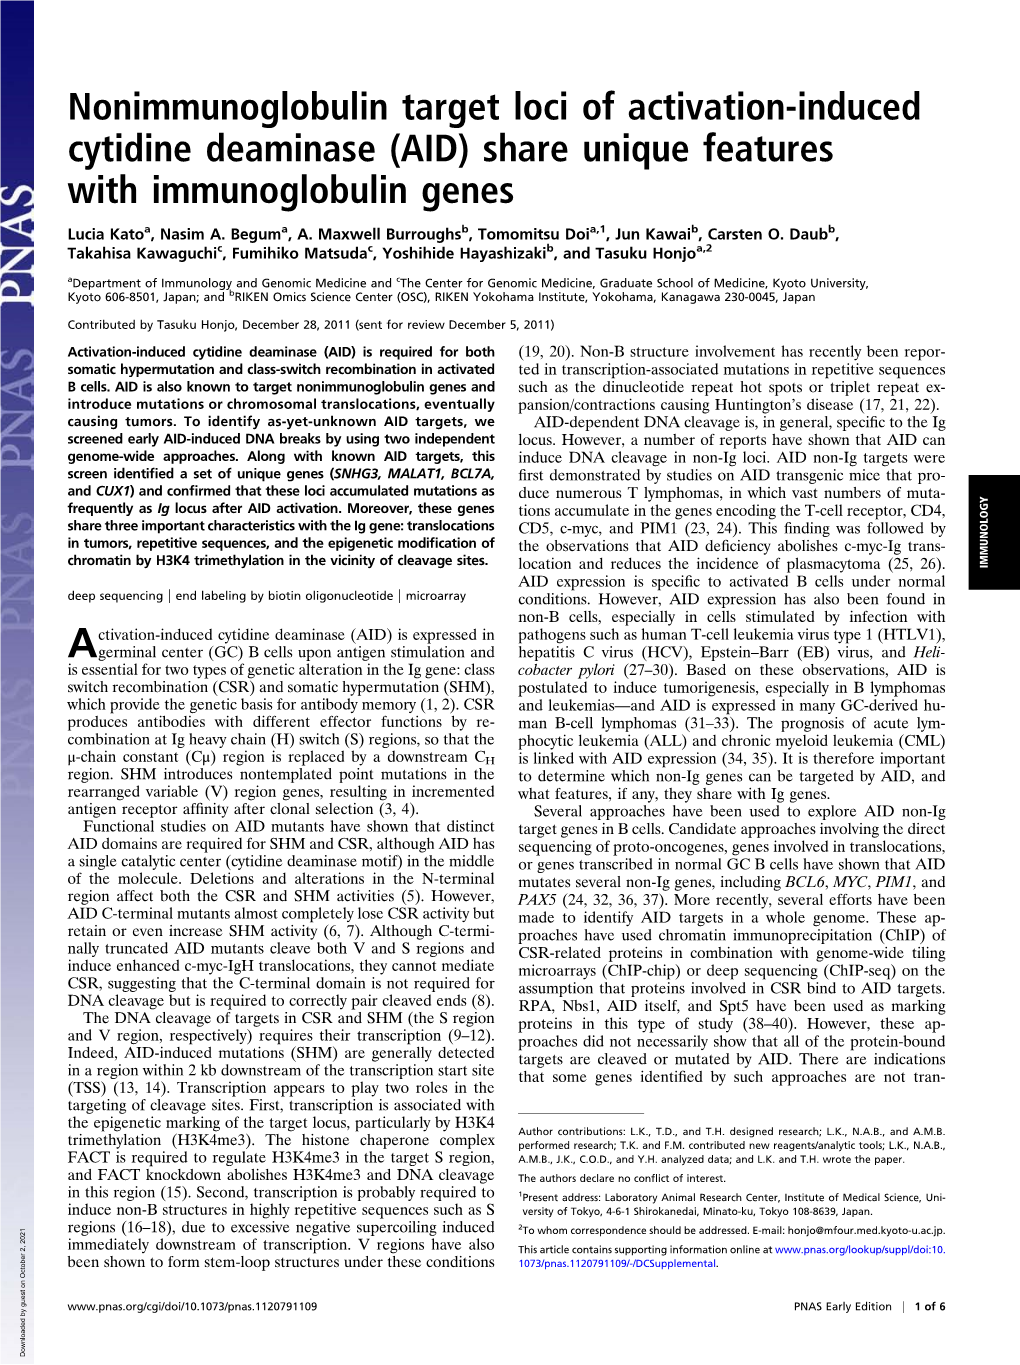 Nonimmunoglobulin Target Loci of Activation-Induced Cytidine Deaminase (AID) Share Unique Features with Immunoglobulin Genes